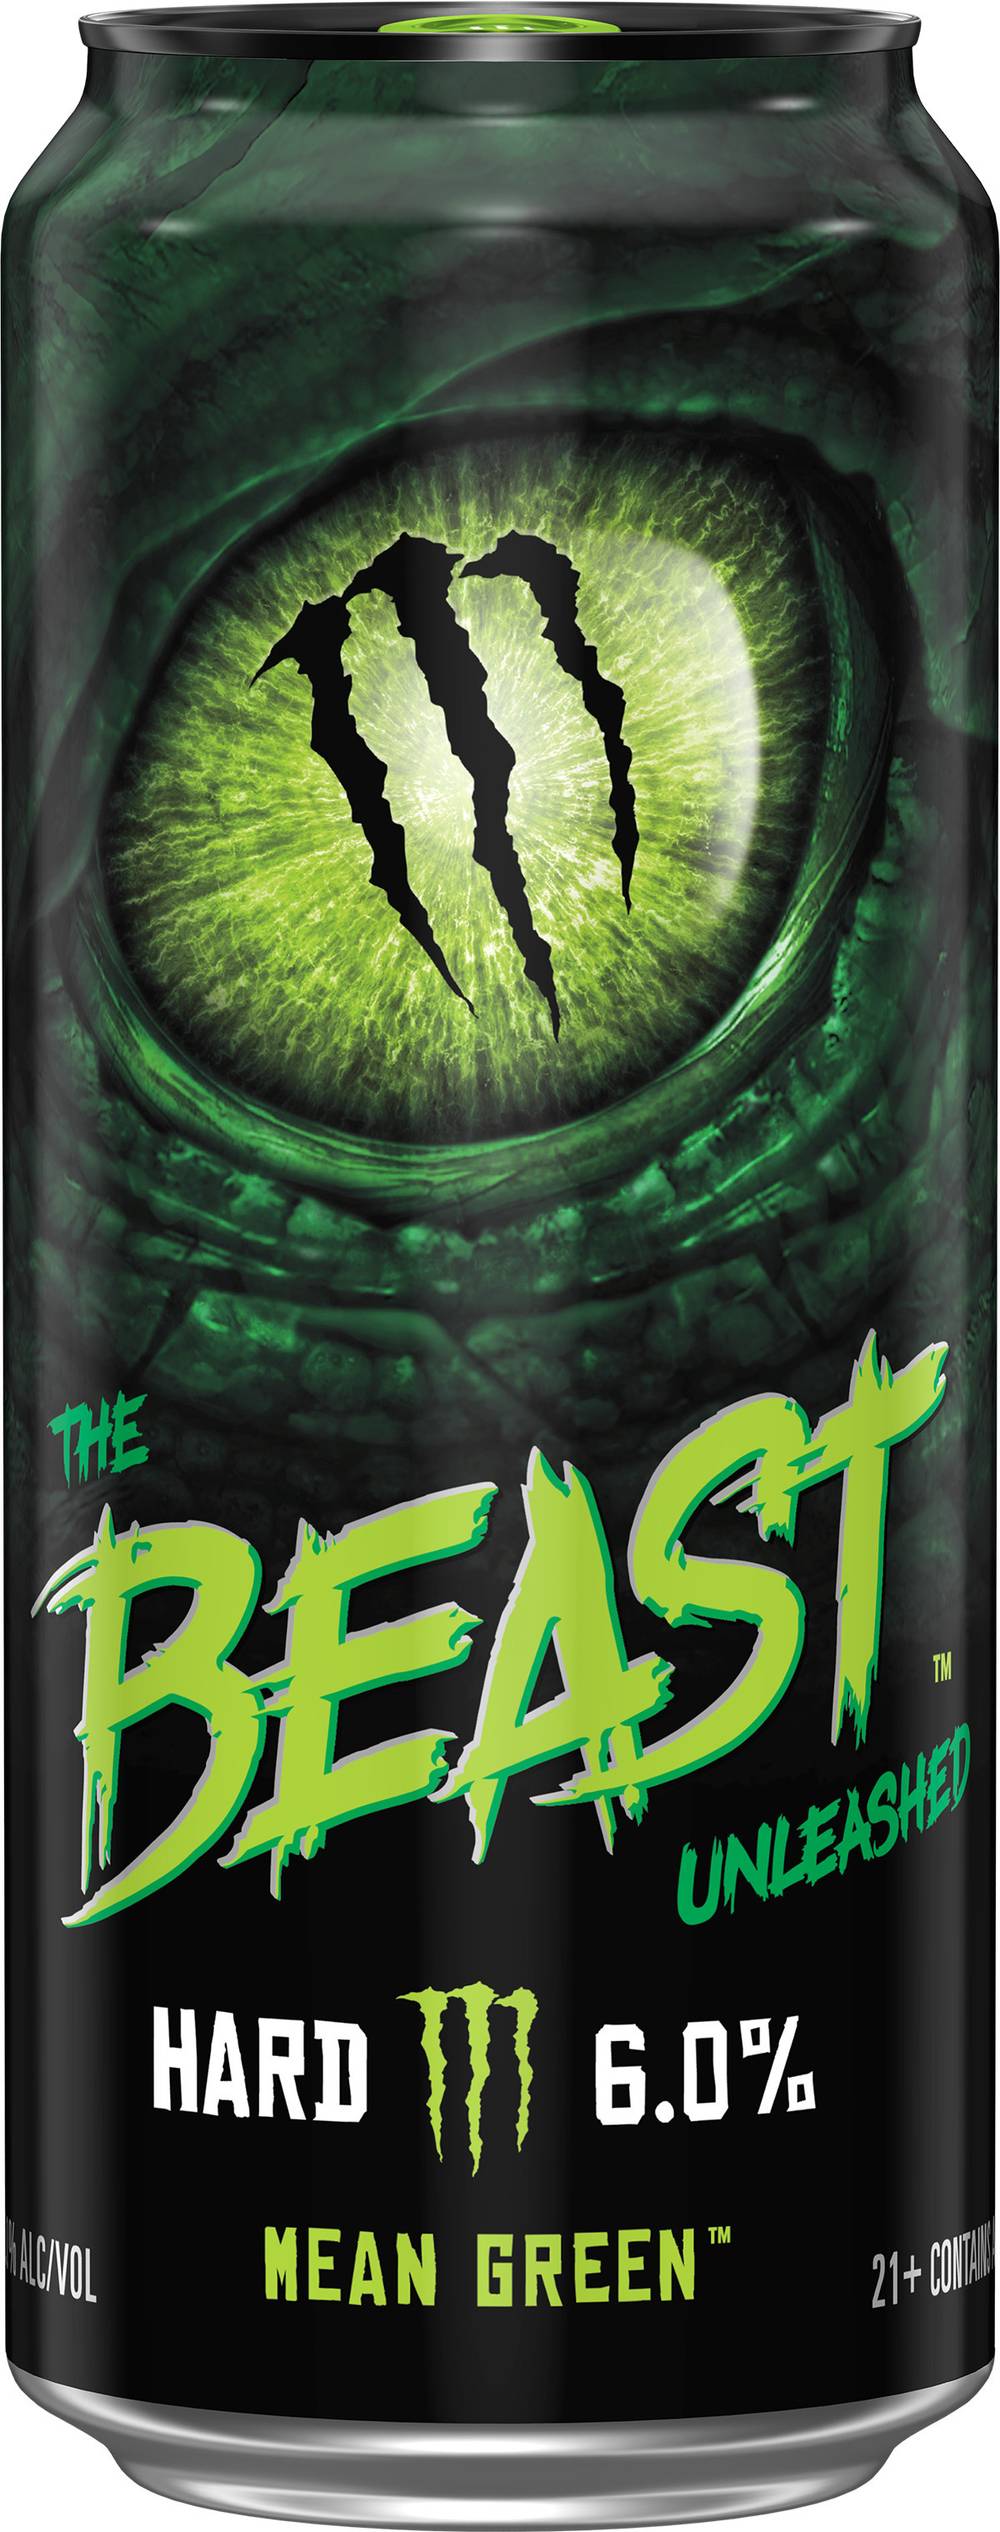 Monster Energy Beast Unleashed Hardseltzer (16 fl oz) (mean green)